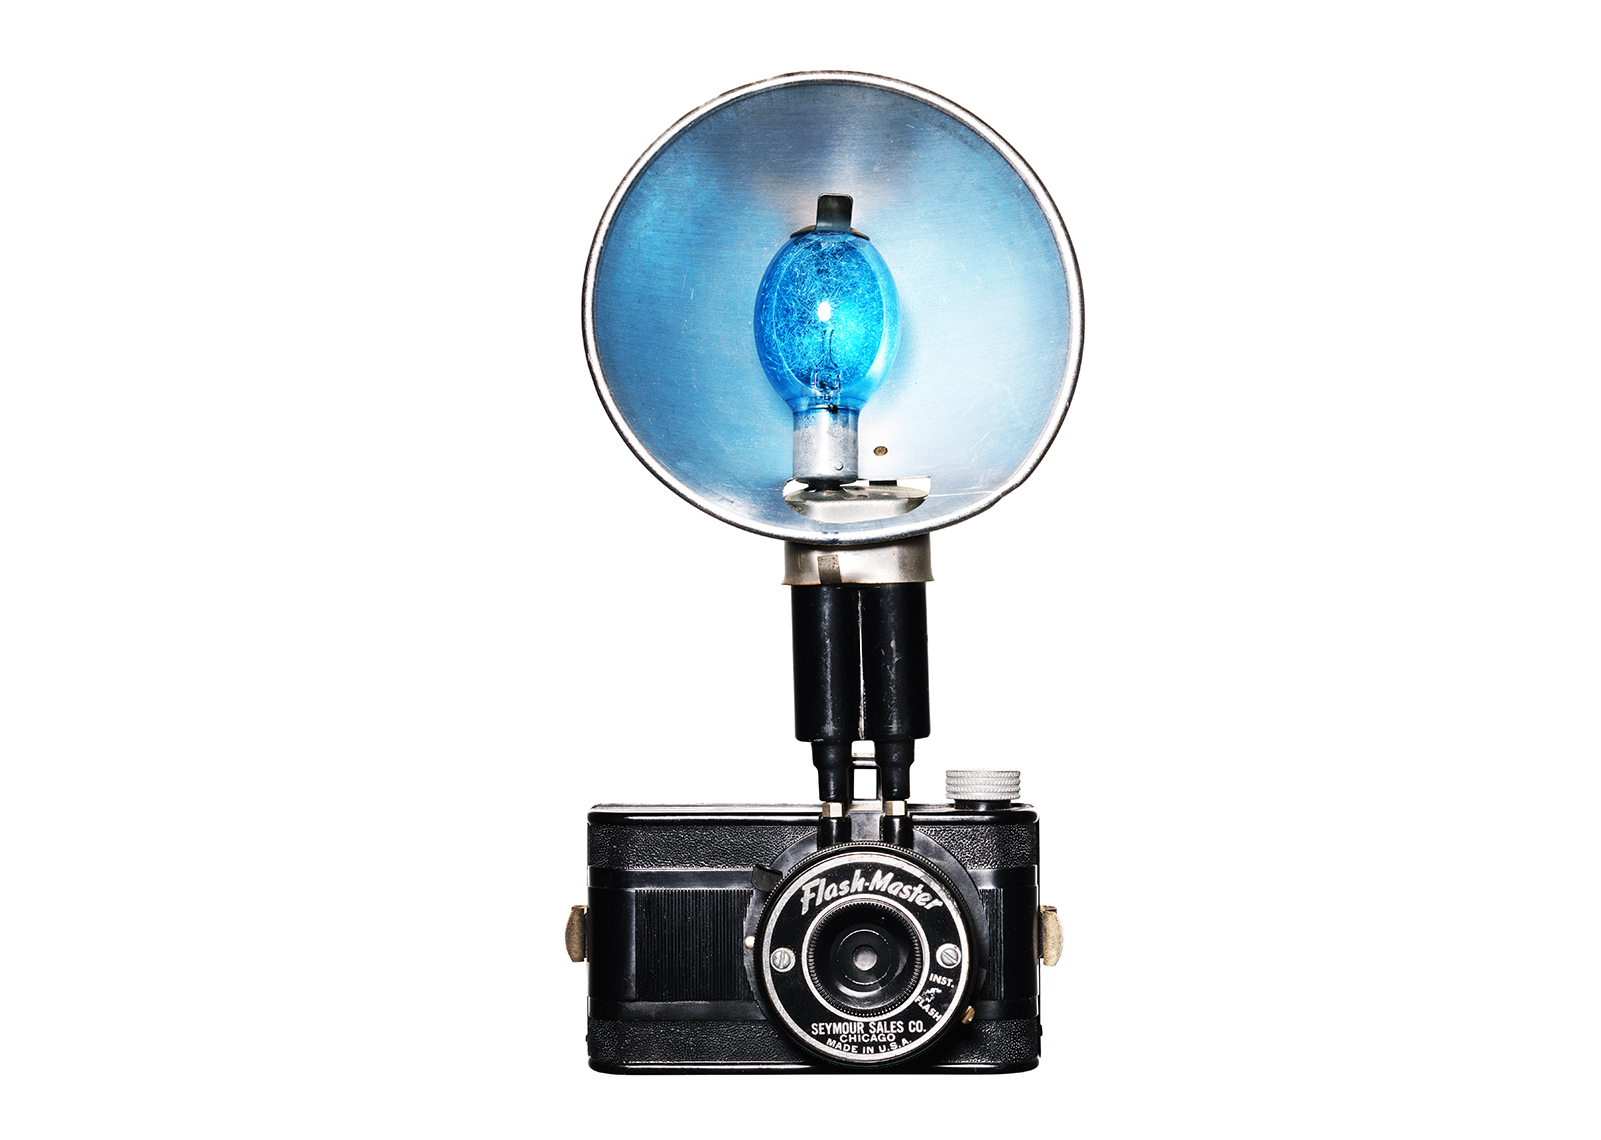 Flash Master Camera — Boston Still Life and Product Photography